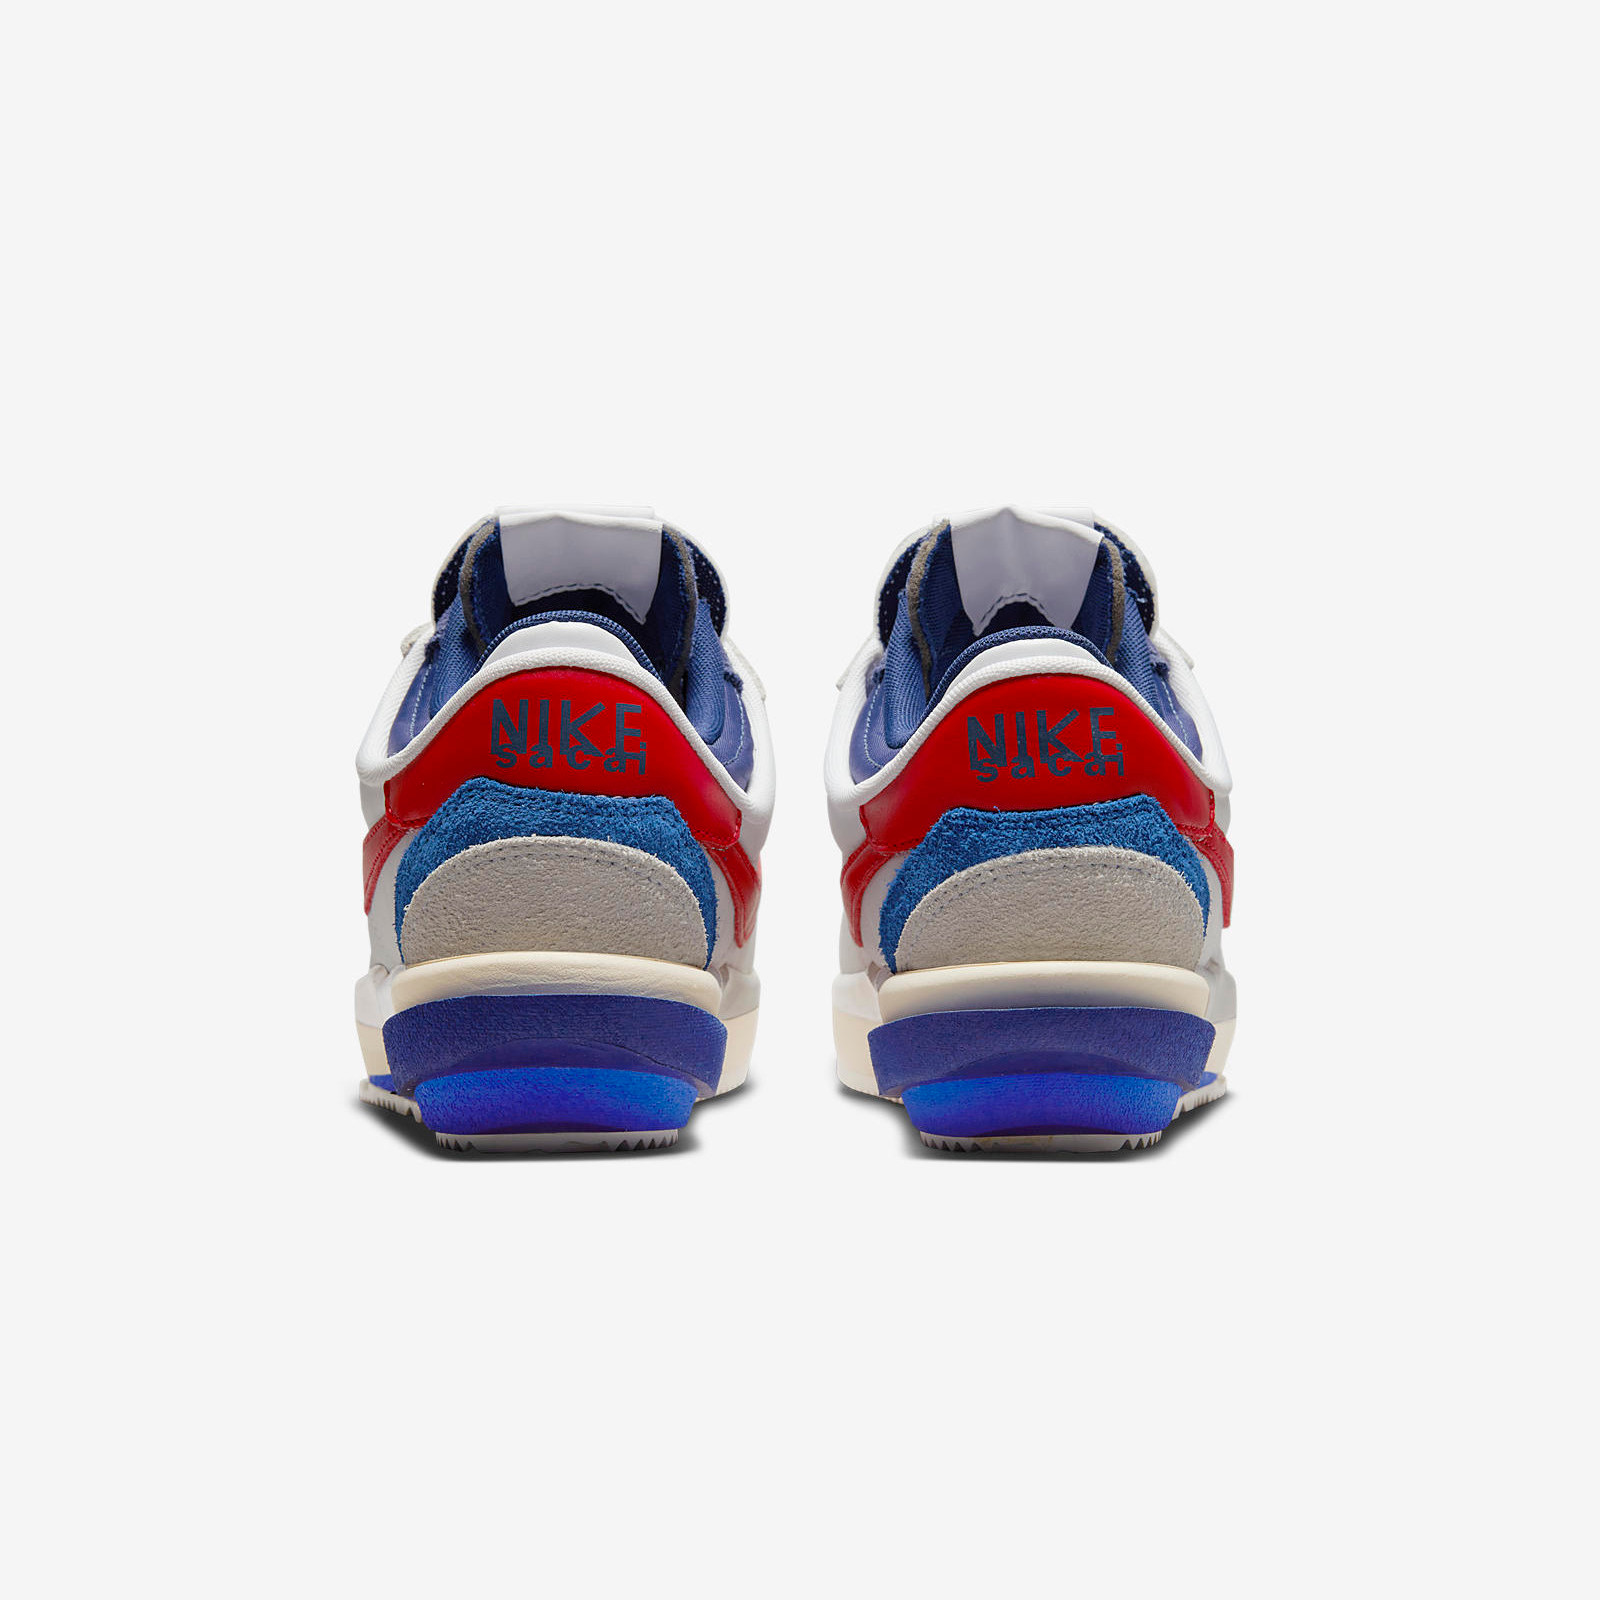 Sacai x Nike
Zoom Cortez
White / Red / Blue